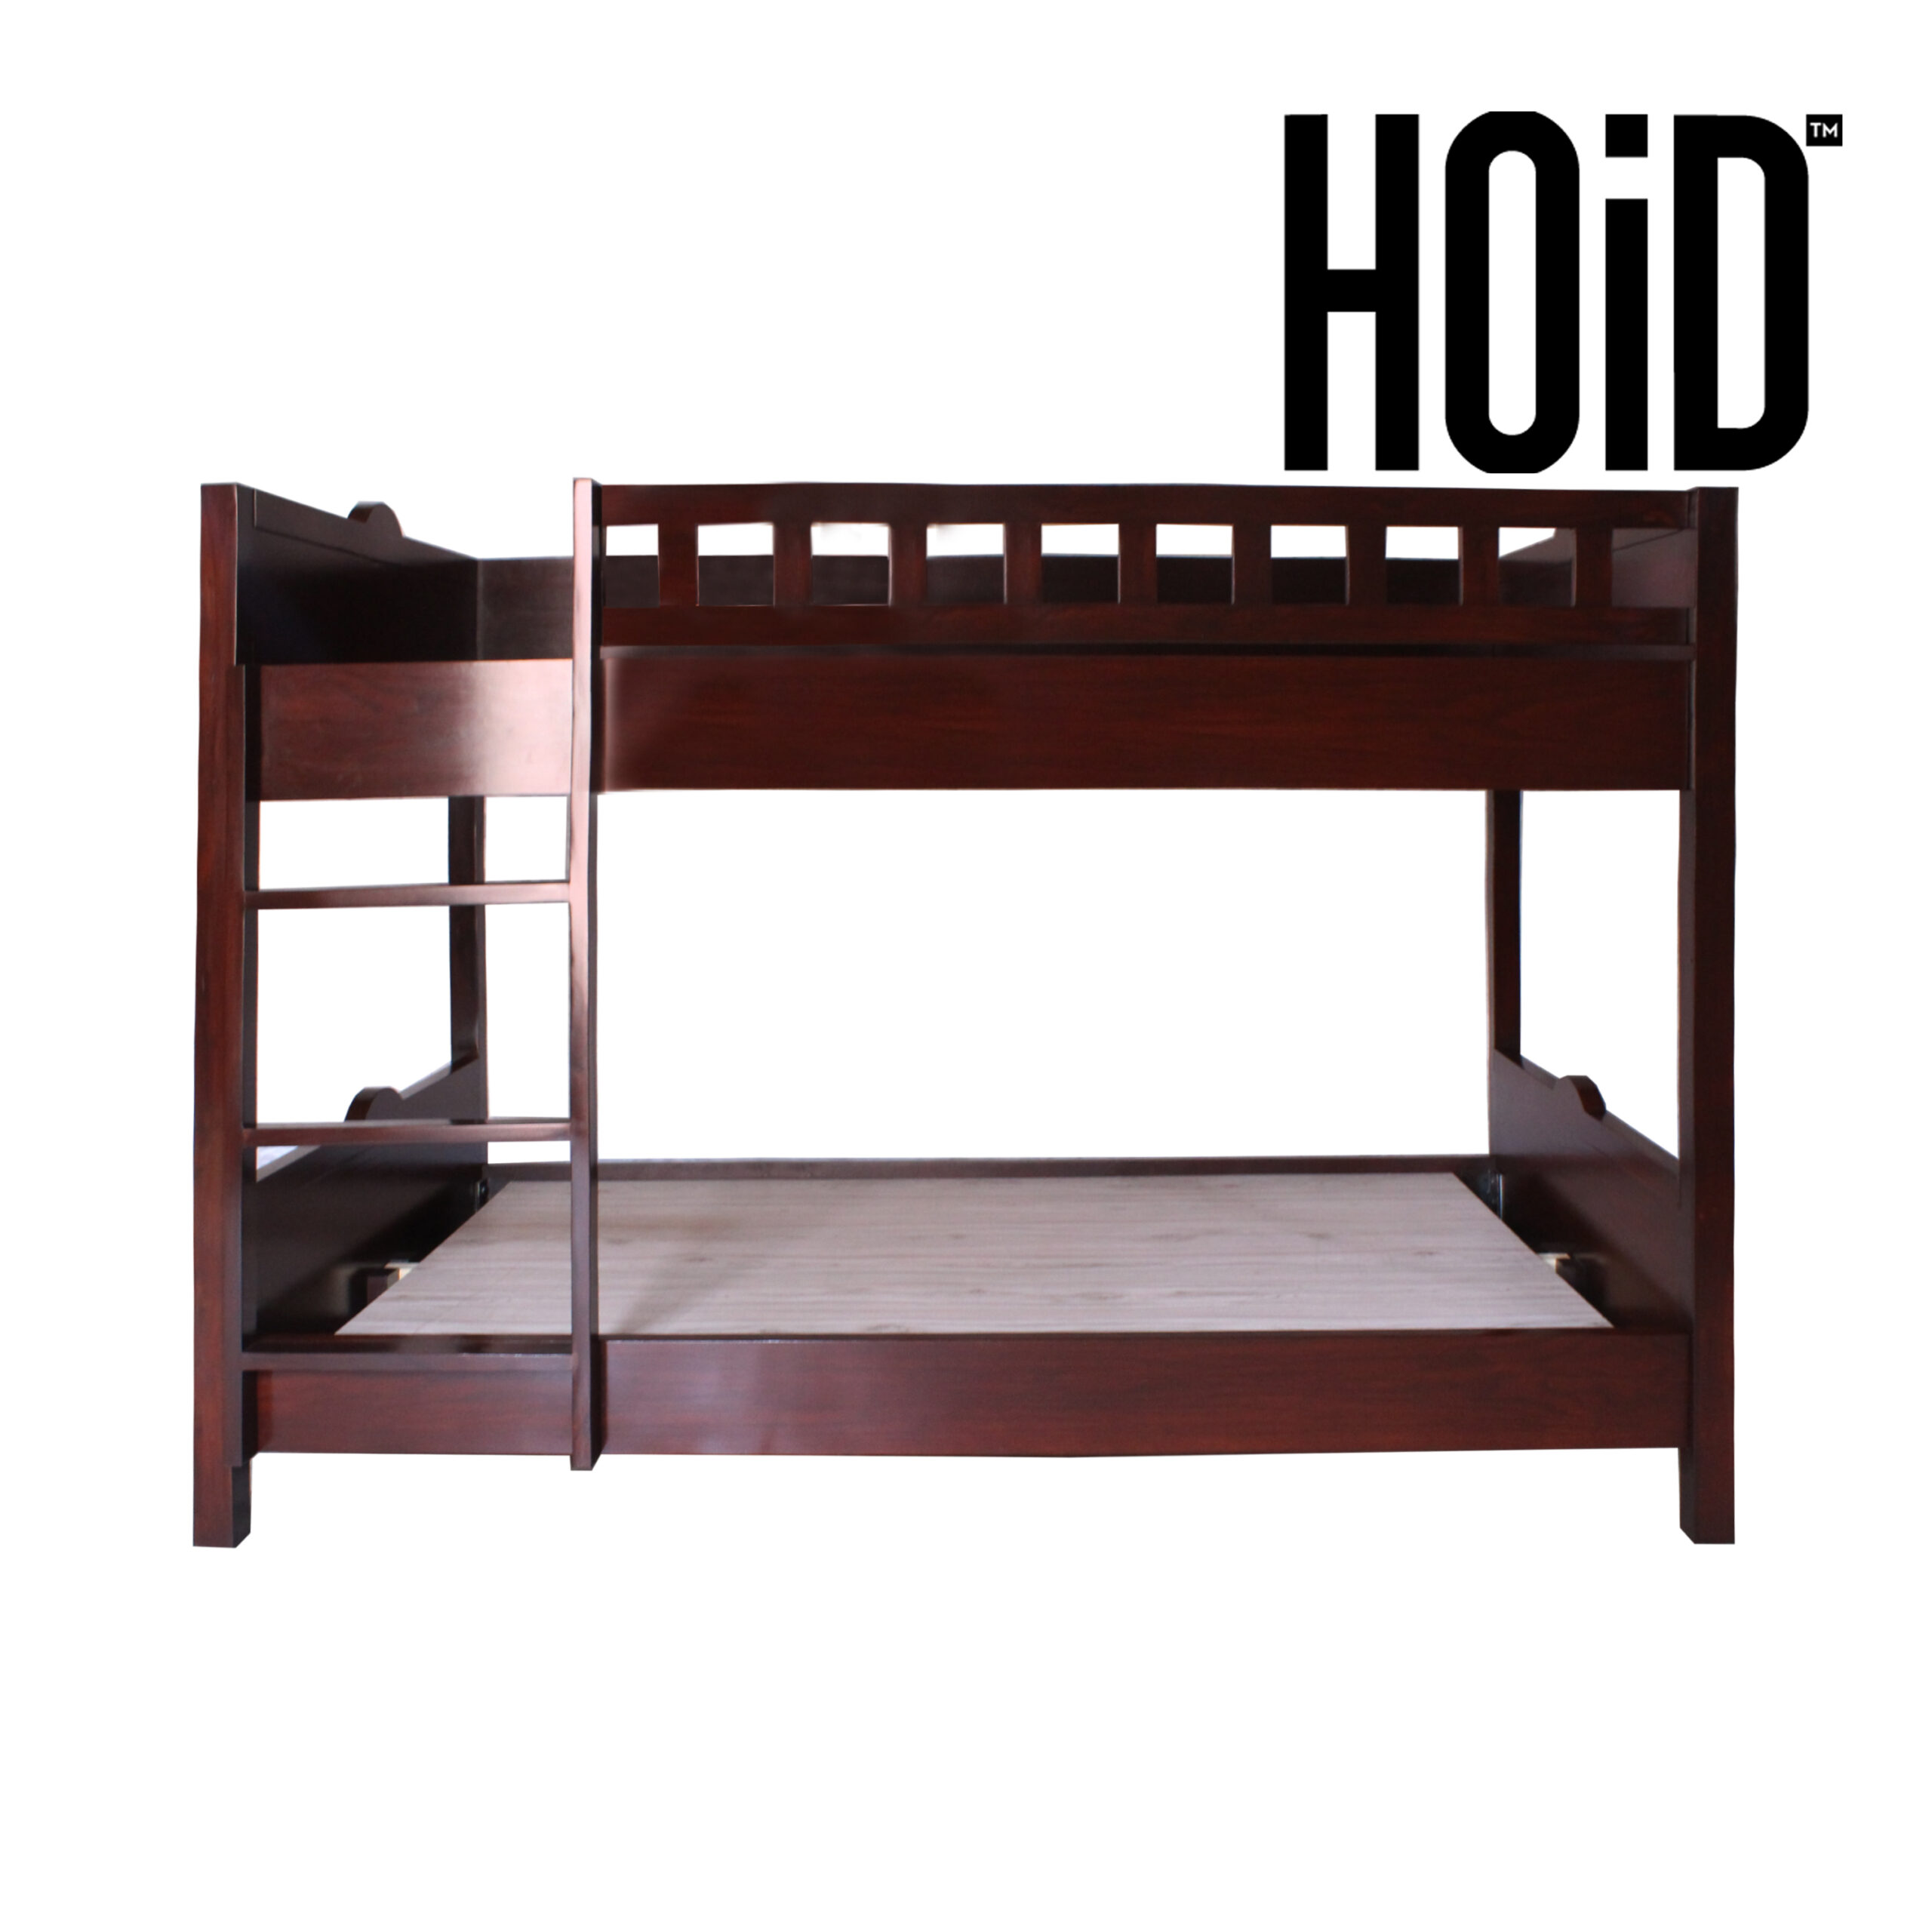 Vet-bunk-bed-scaled-2.jpg